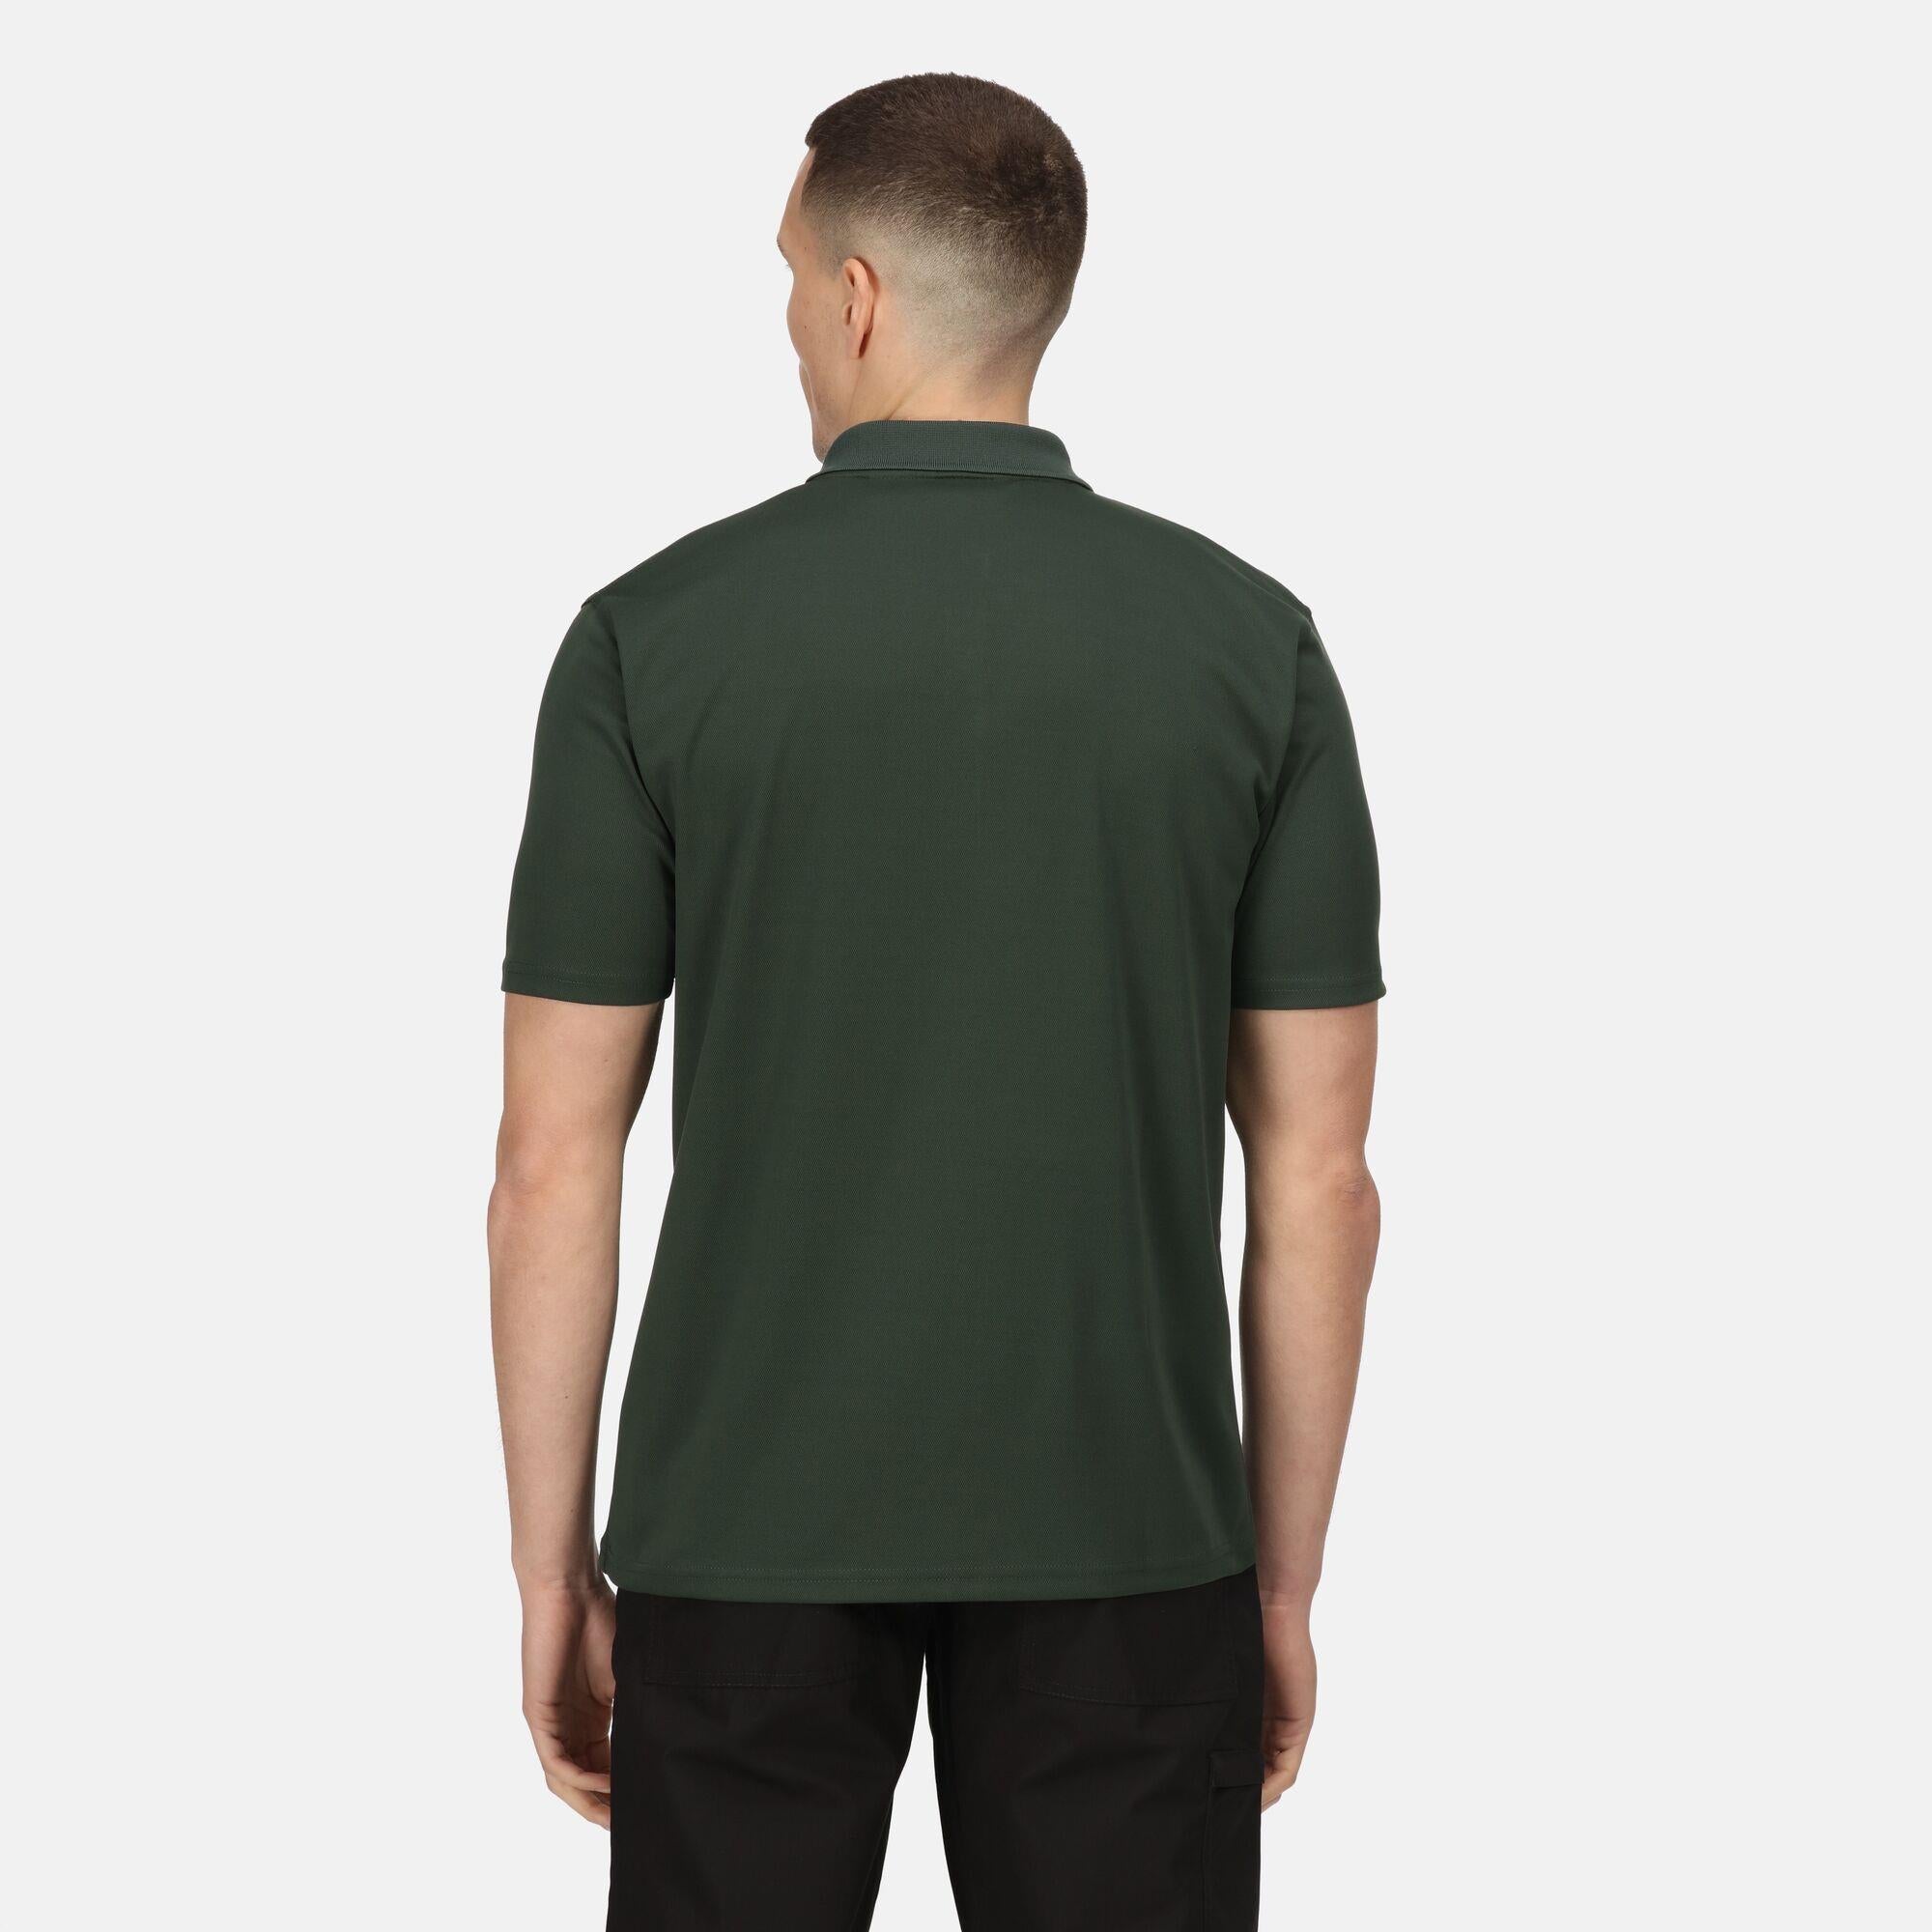 Regatta Pro green men's wicking short-sleeve work polo shirt #TRS224